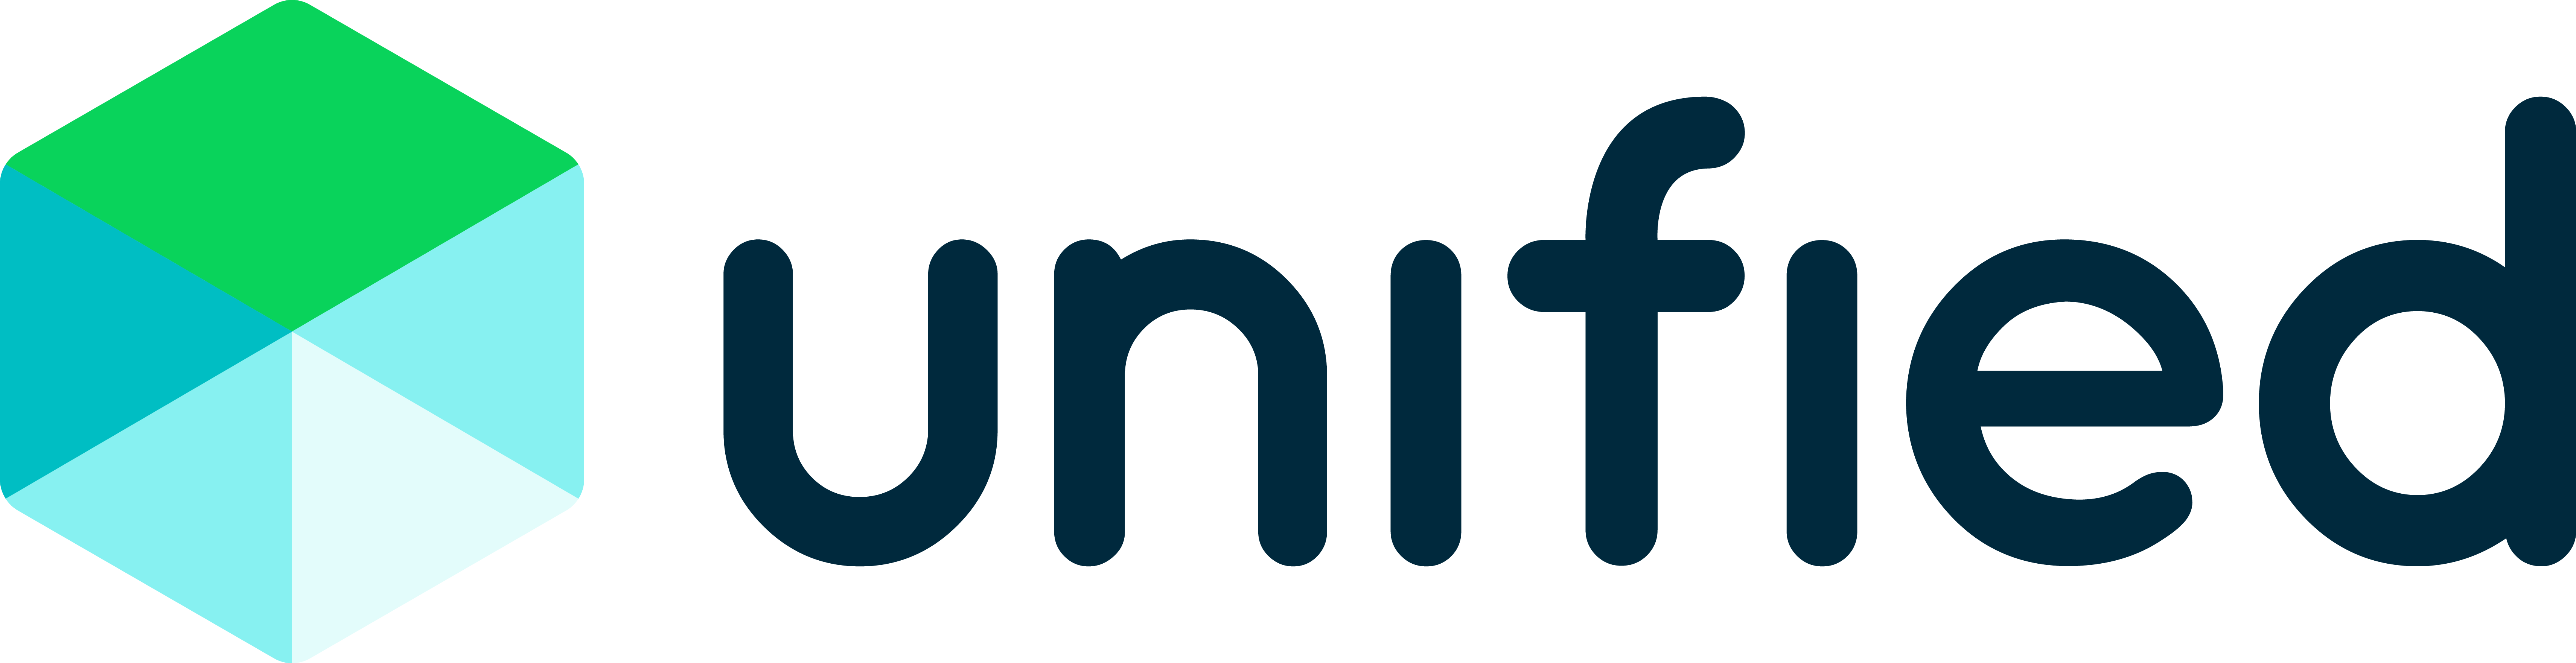 Unified client logo